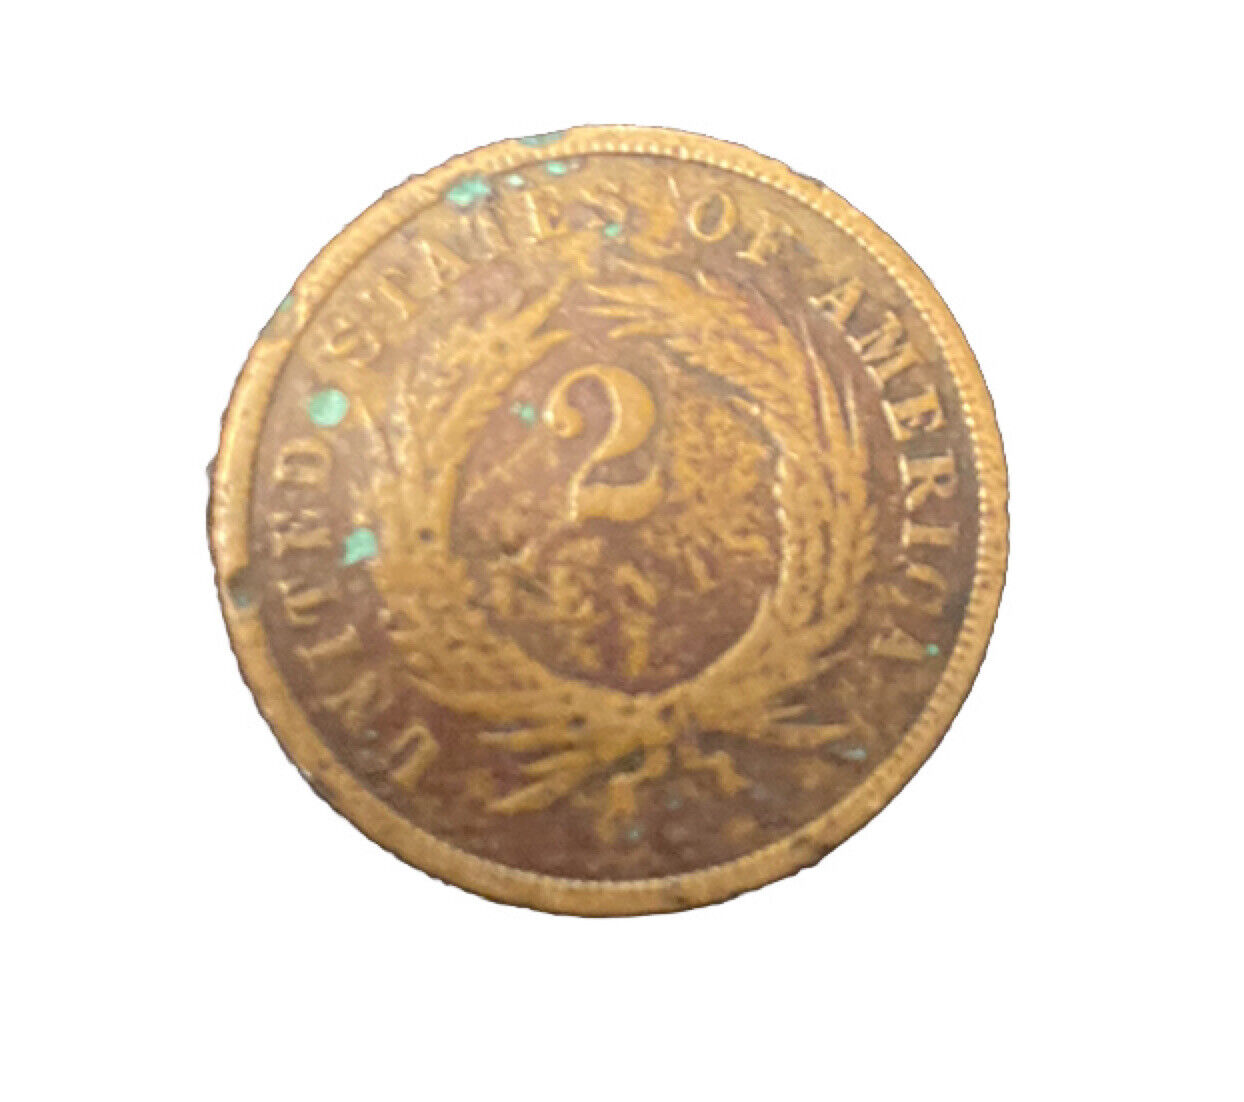 1868 Two Cent Piece Post Civil War Era US Copper Coin